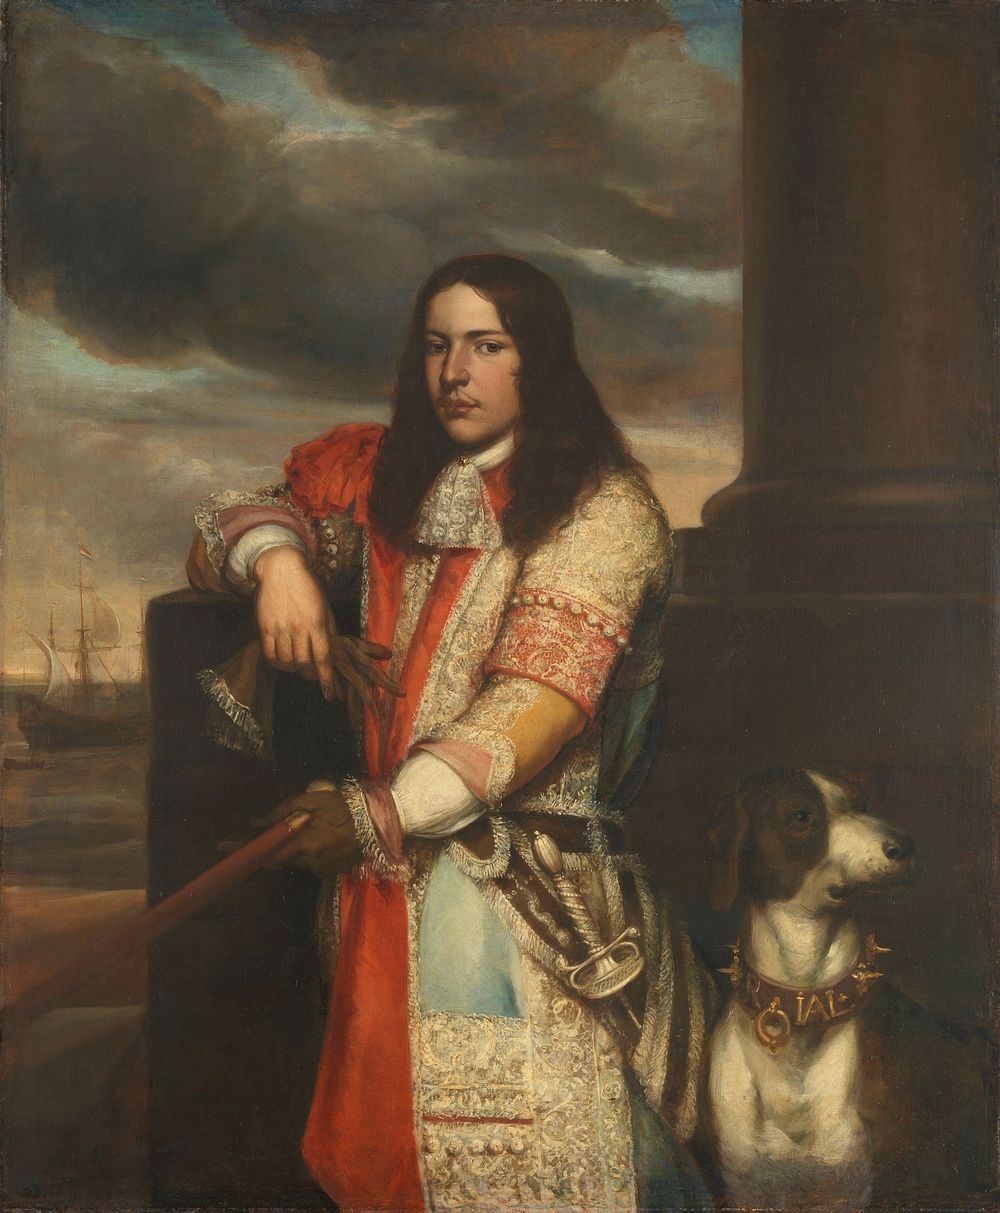 Engel de Ruyter (1649-83), Vice Admiral, Son of Michiel Adriaensz de Ruyter (1667 - 1680) by Jan Andrea Lievens